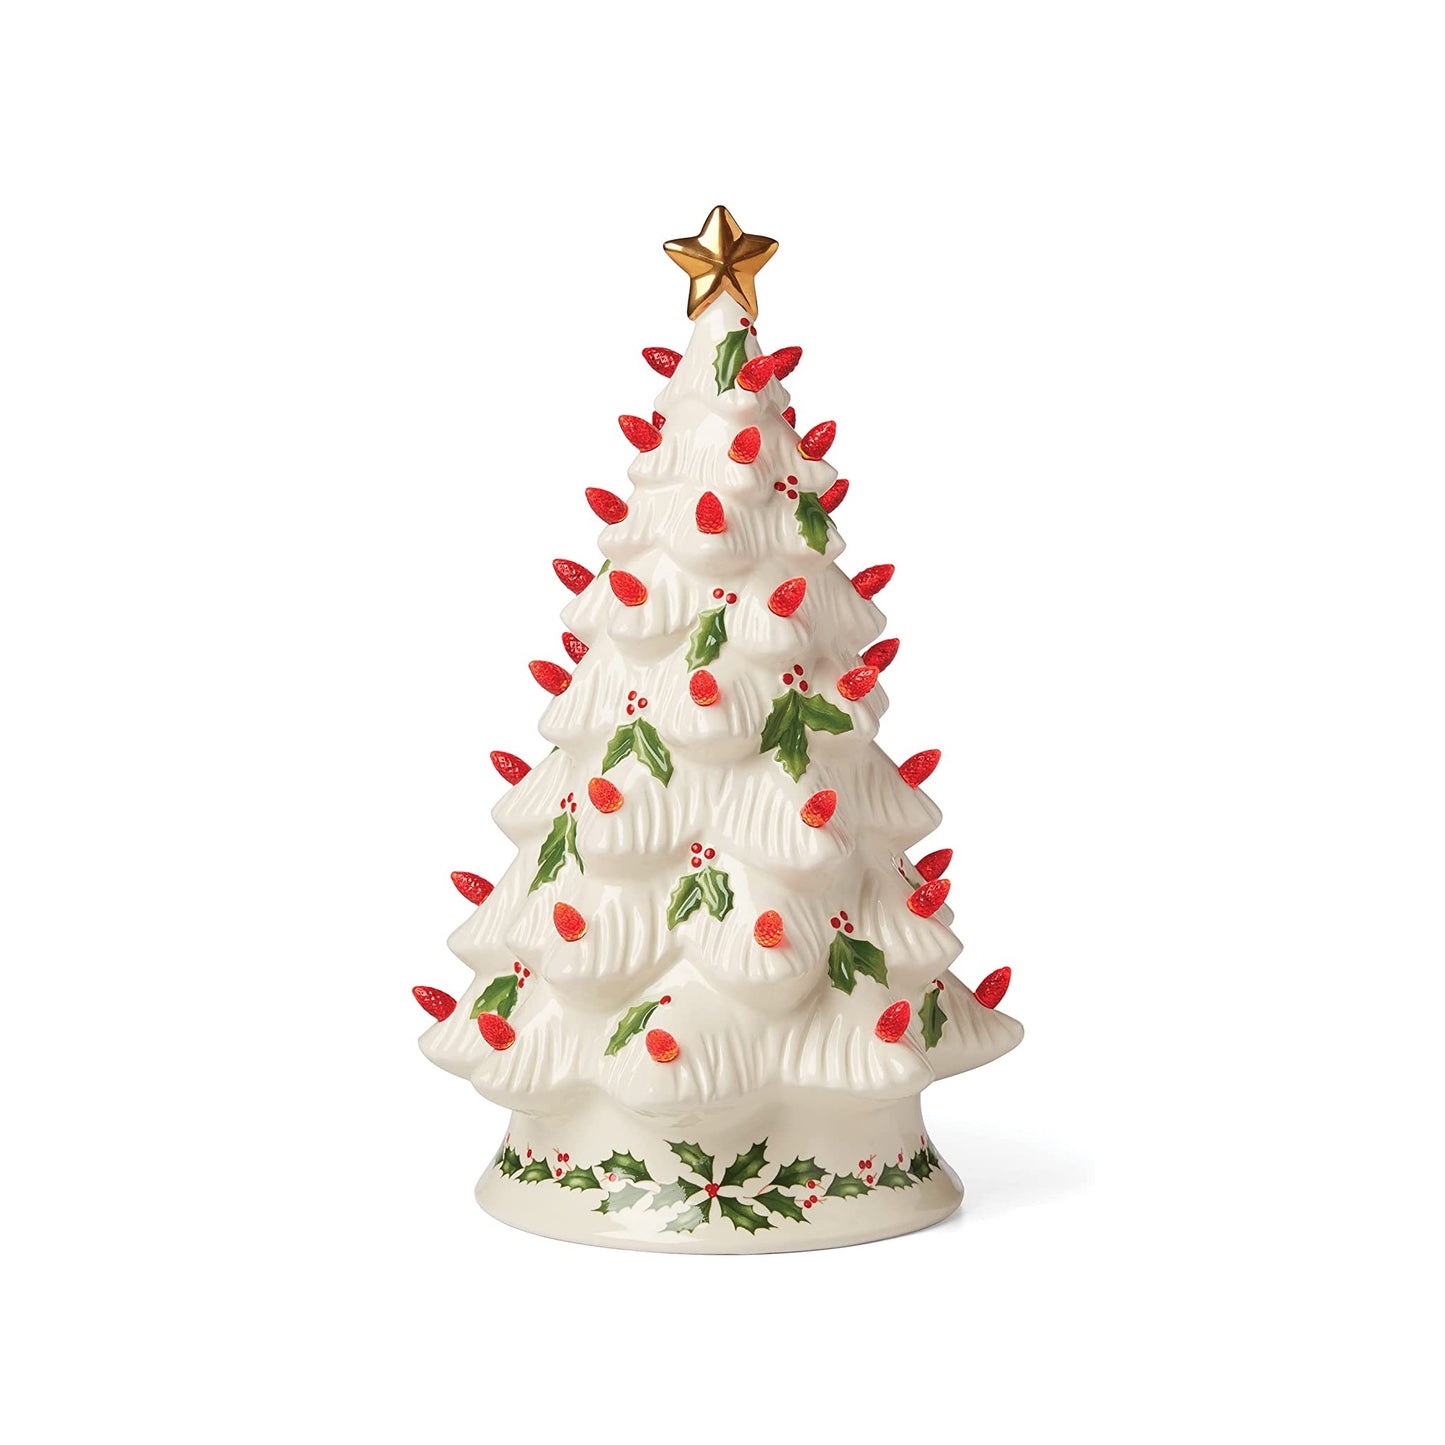 Treasured Traditions Holiday Red Bulbs Light-Up Tree Figurine by Lenox